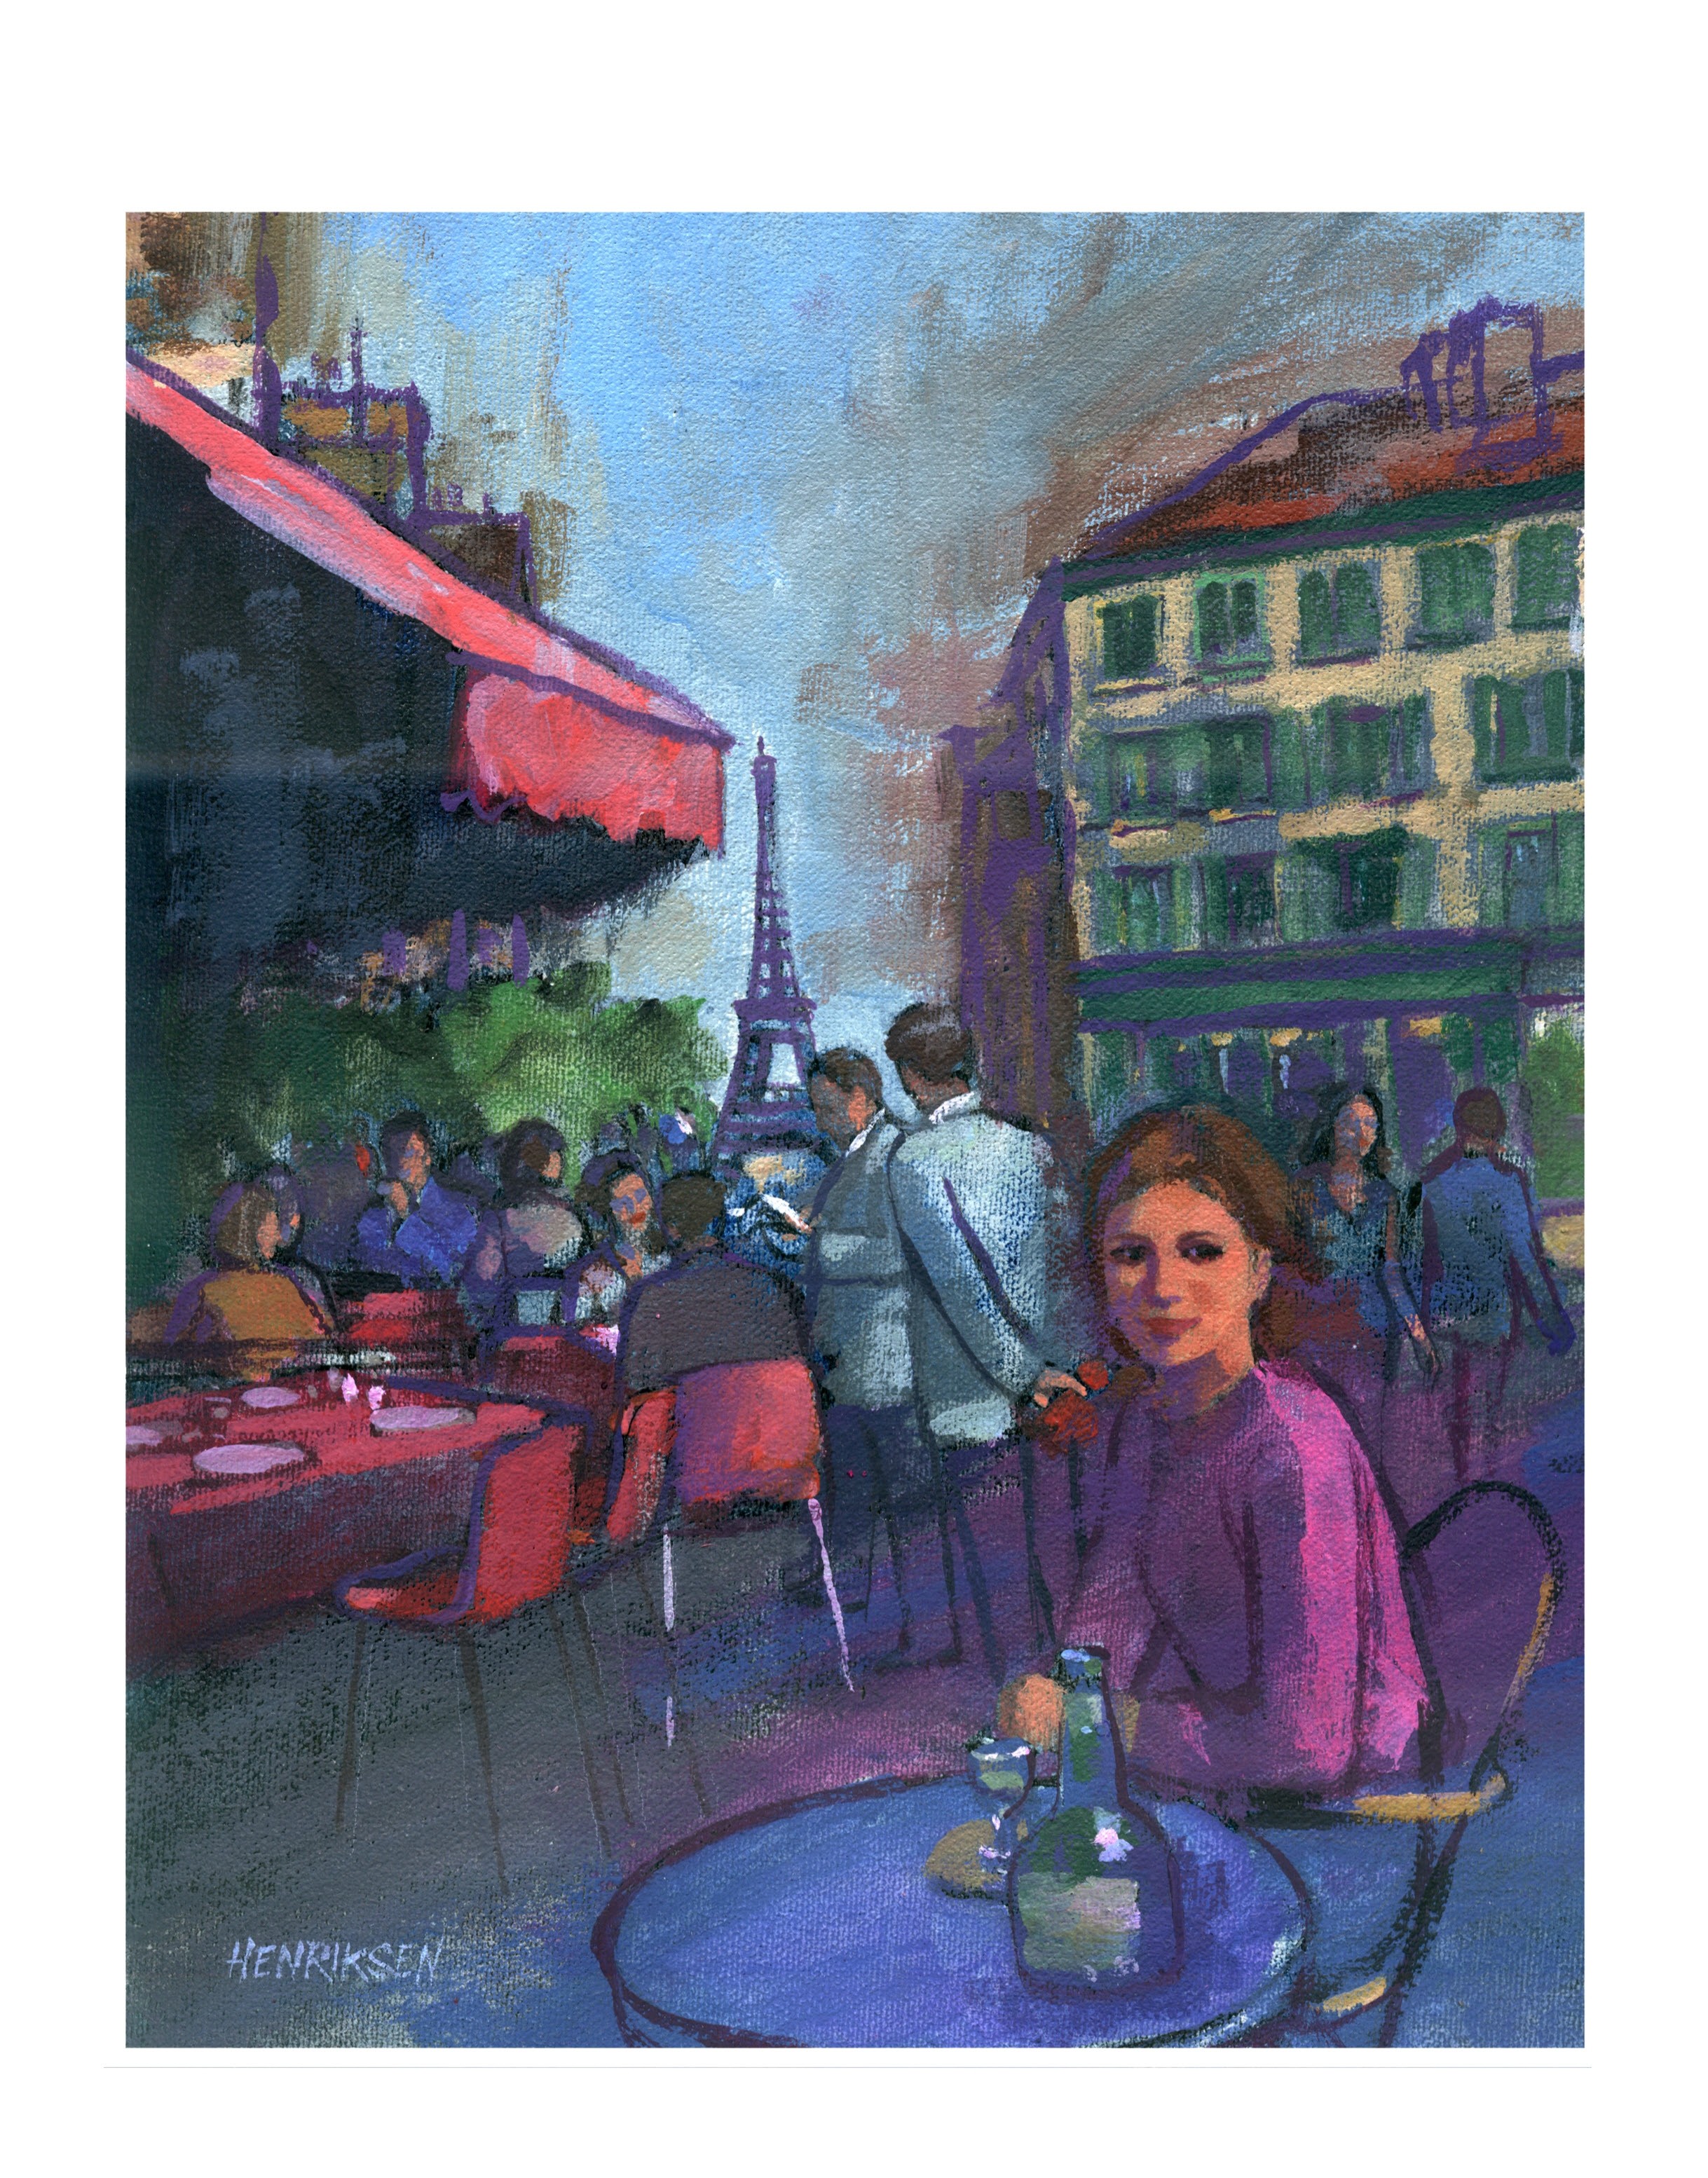 French Outside by Harold Henriksen.